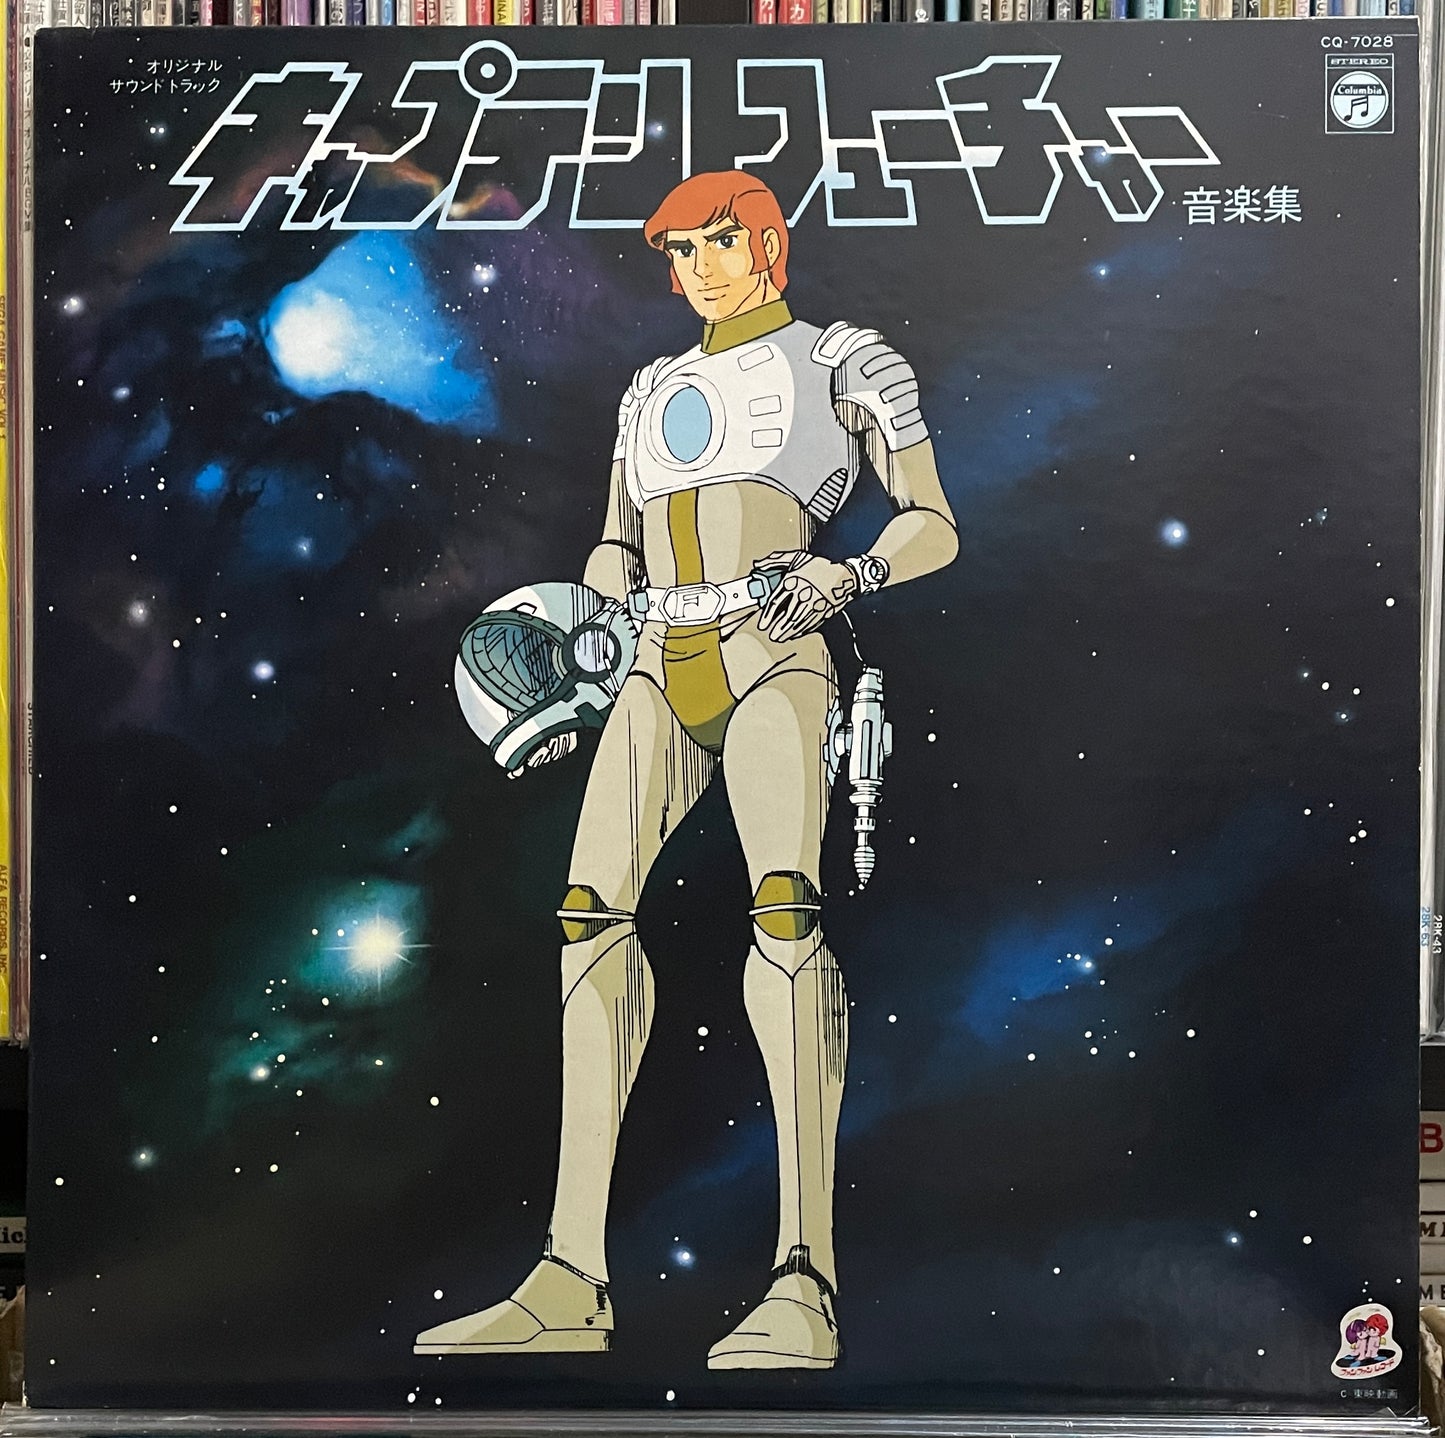 Yuji Ohno "Captain Future" (1979)